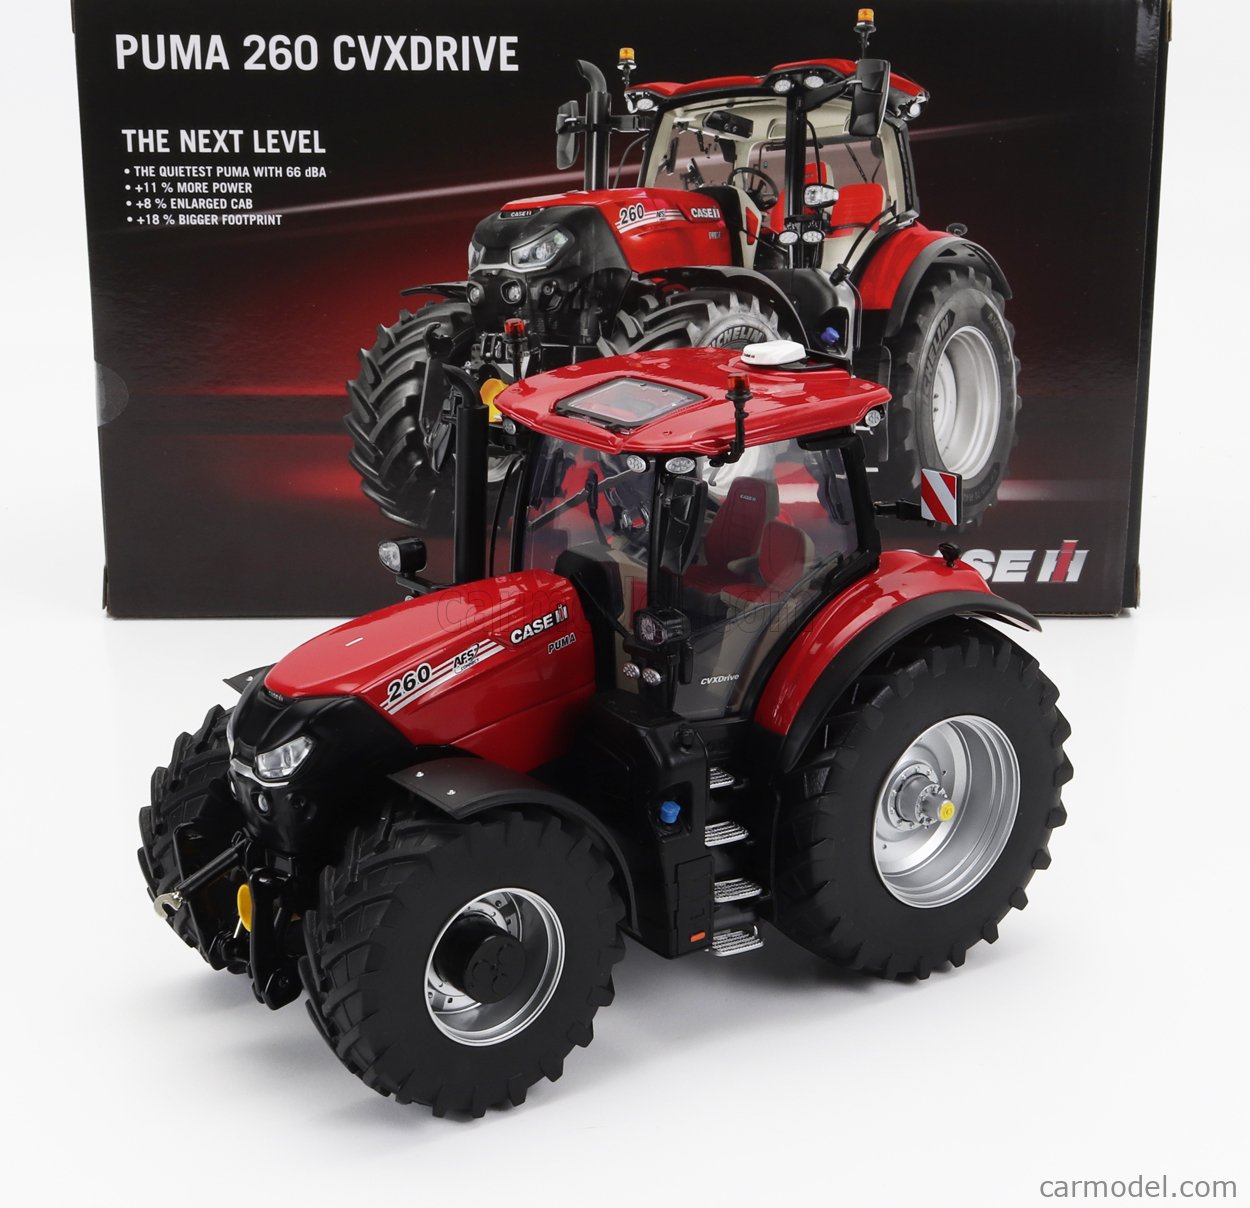 Universal Hobbies 1:32 Scale Case IH Puma 165 CVXDrive Red Tractor Diecast  Replica UH6449 - UNIVERSAL HOBBIES